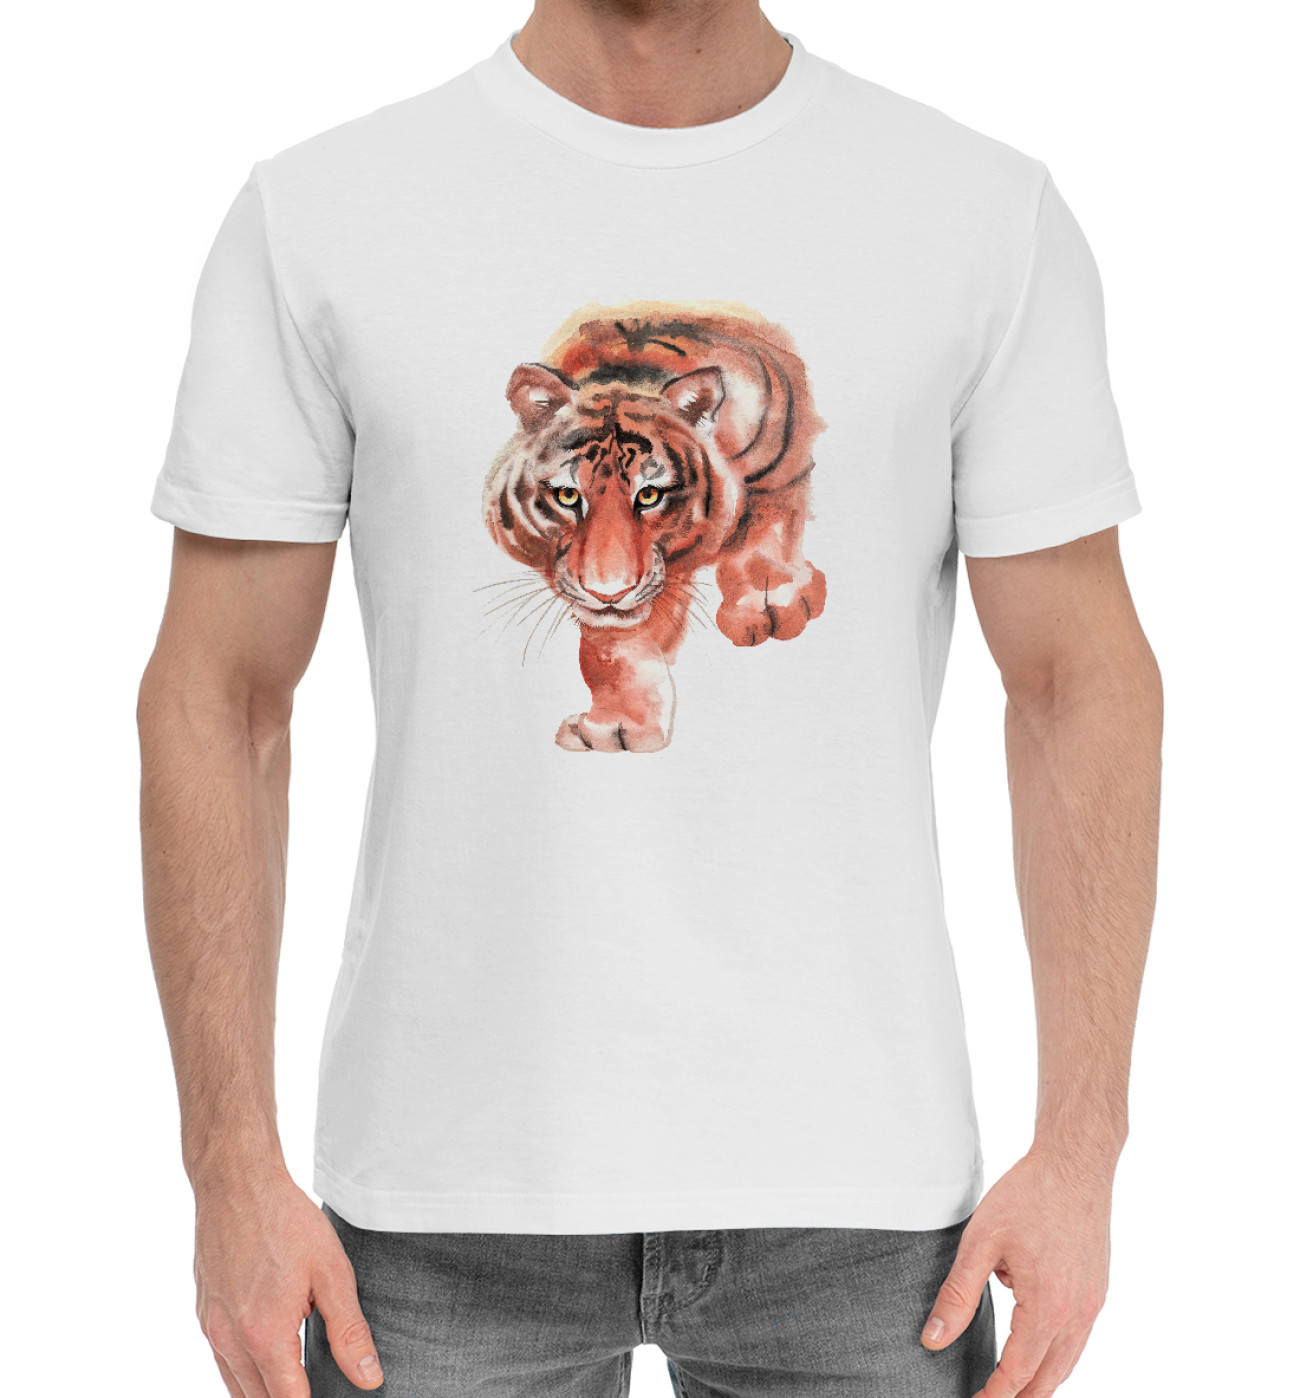 Мужская Хлопковая футболка Крадущийся тигр, артикул: TGR-629087-hfu-2